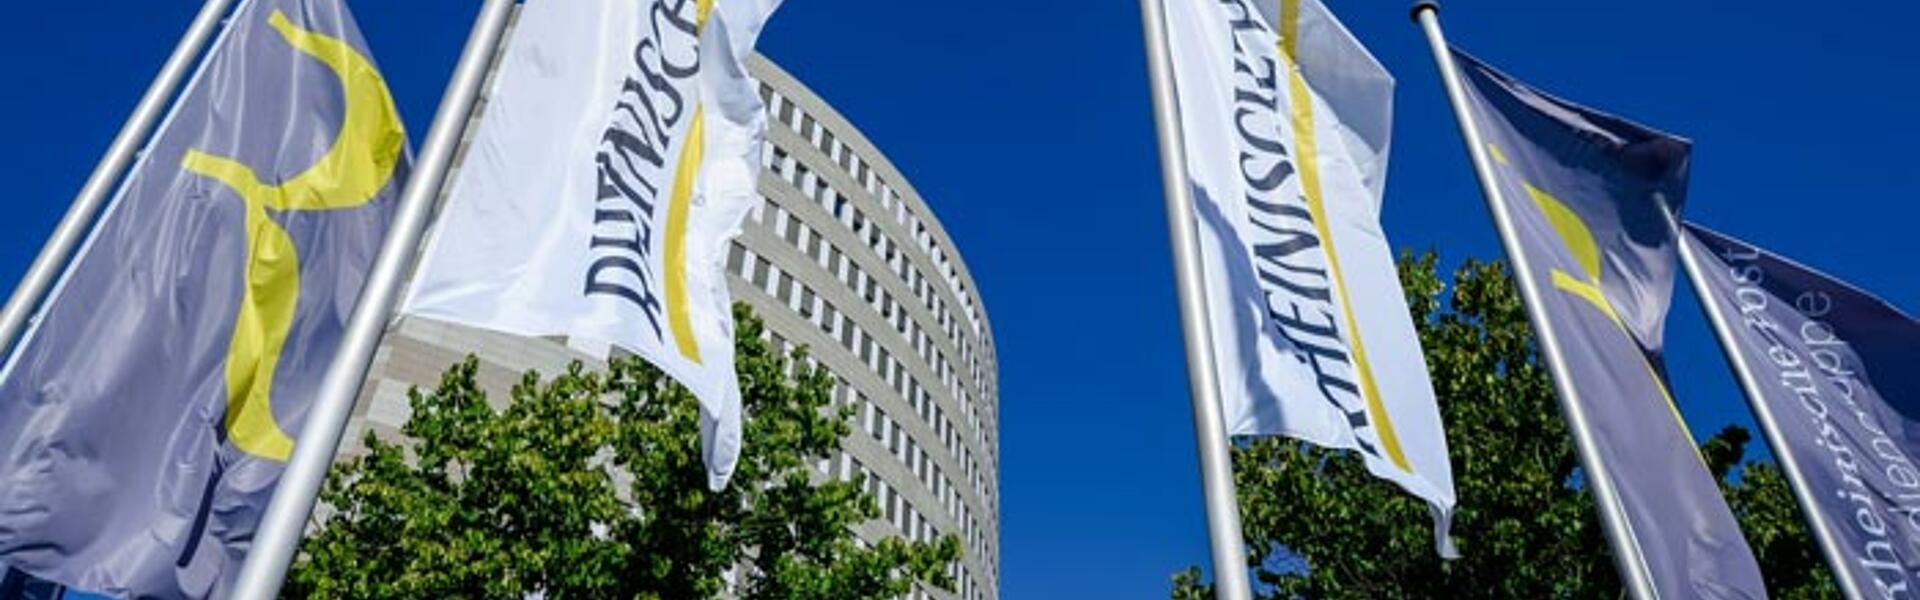 Success Story | Rheinische Post | Company Building Flags